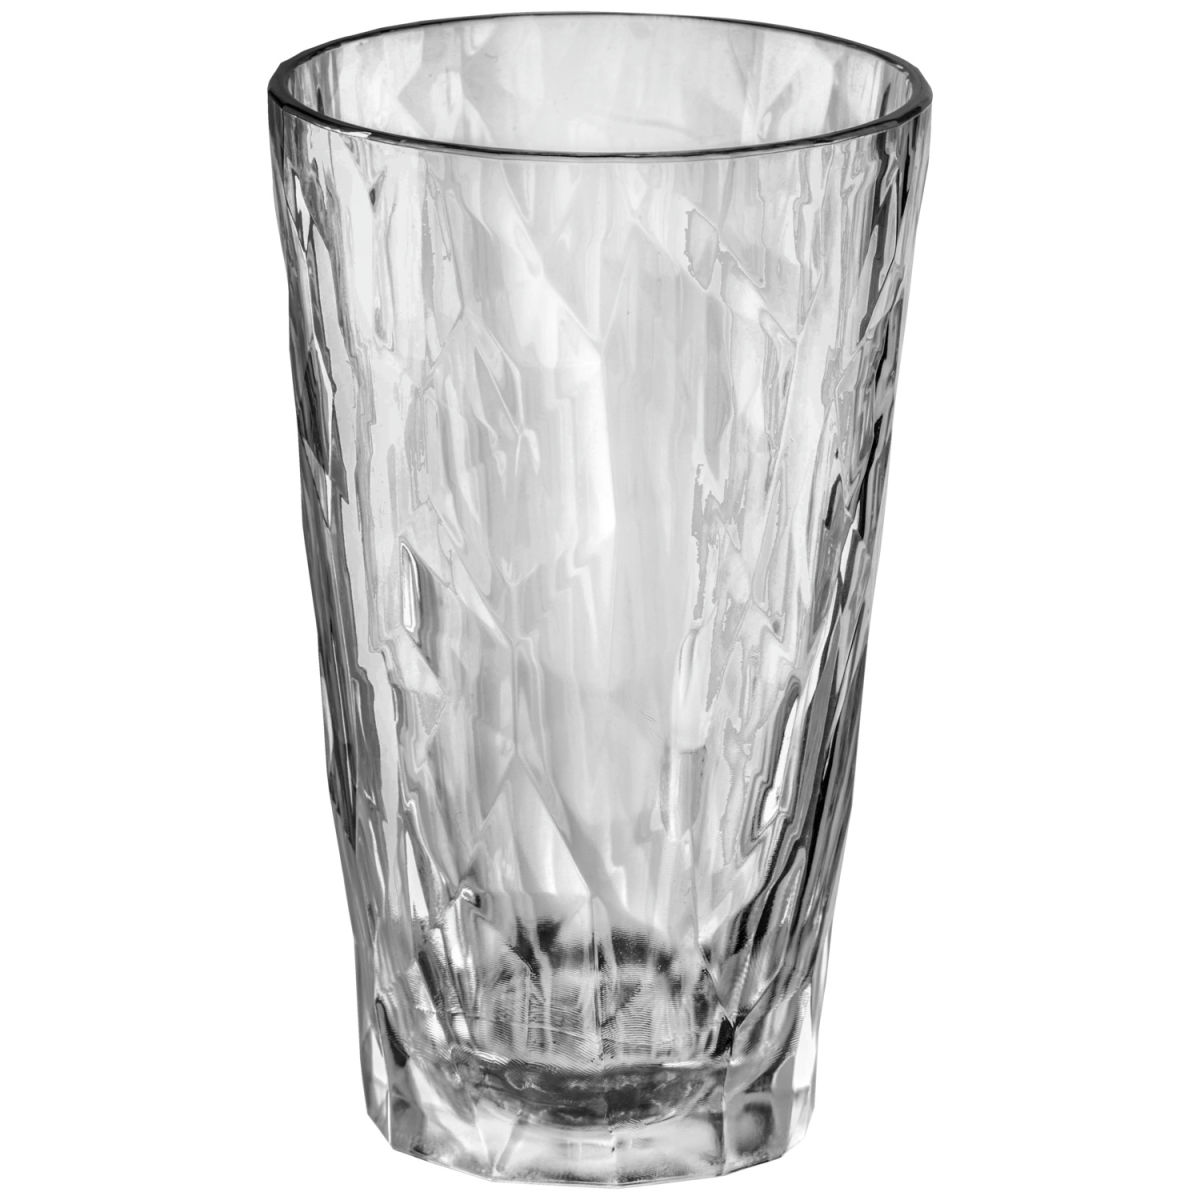 Koziol Longdrinkglas Tumbler Club No. 6 Superglas II; 410ml, 8.7x14.1 cm (ØxH); lichtgrijs/transparant; 0.3 l vulstreepje, 9 stuk / verpakking